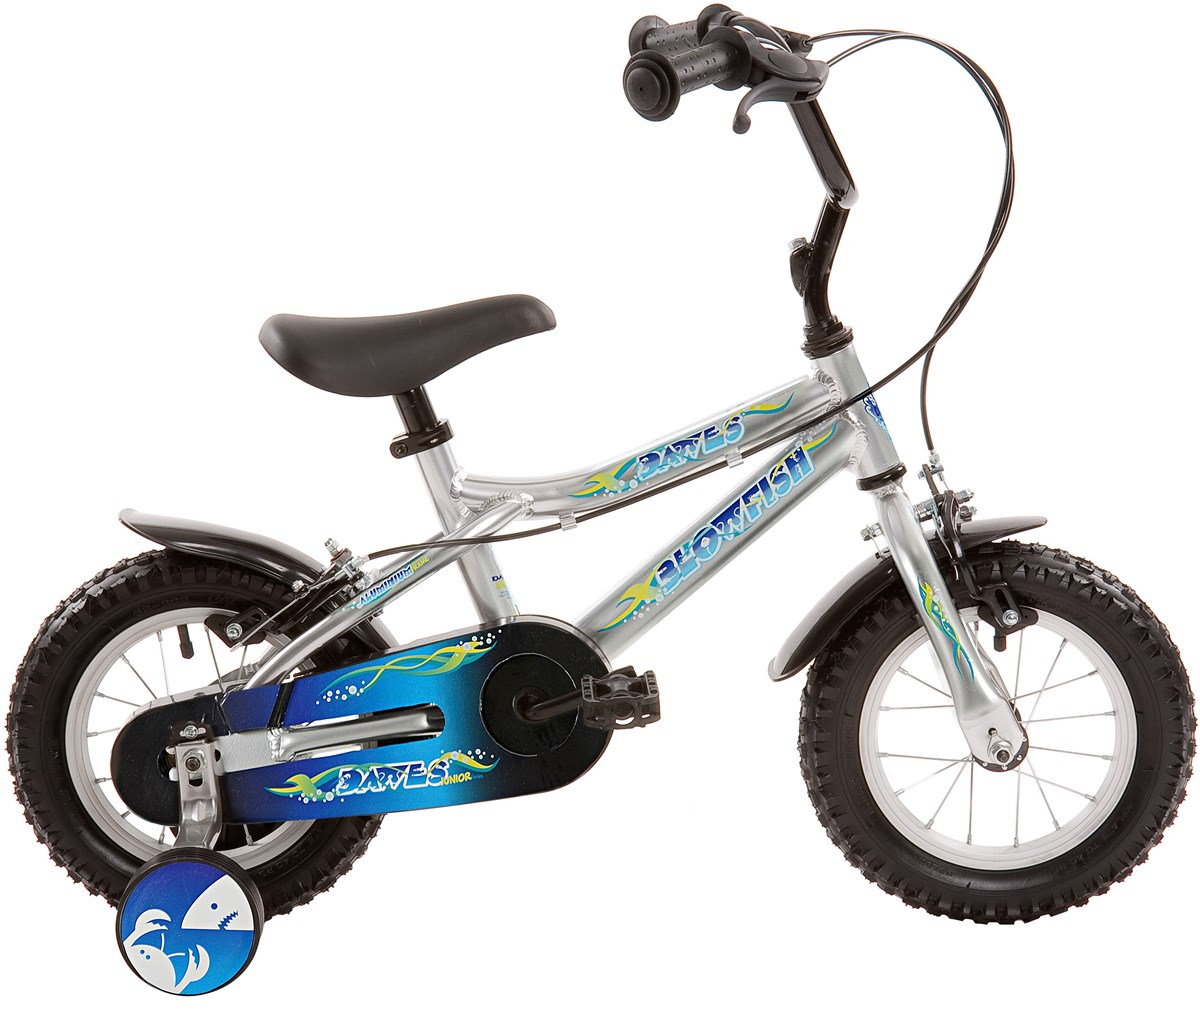 Dawes Blowfish 12w 2017 - Kids Bike product image